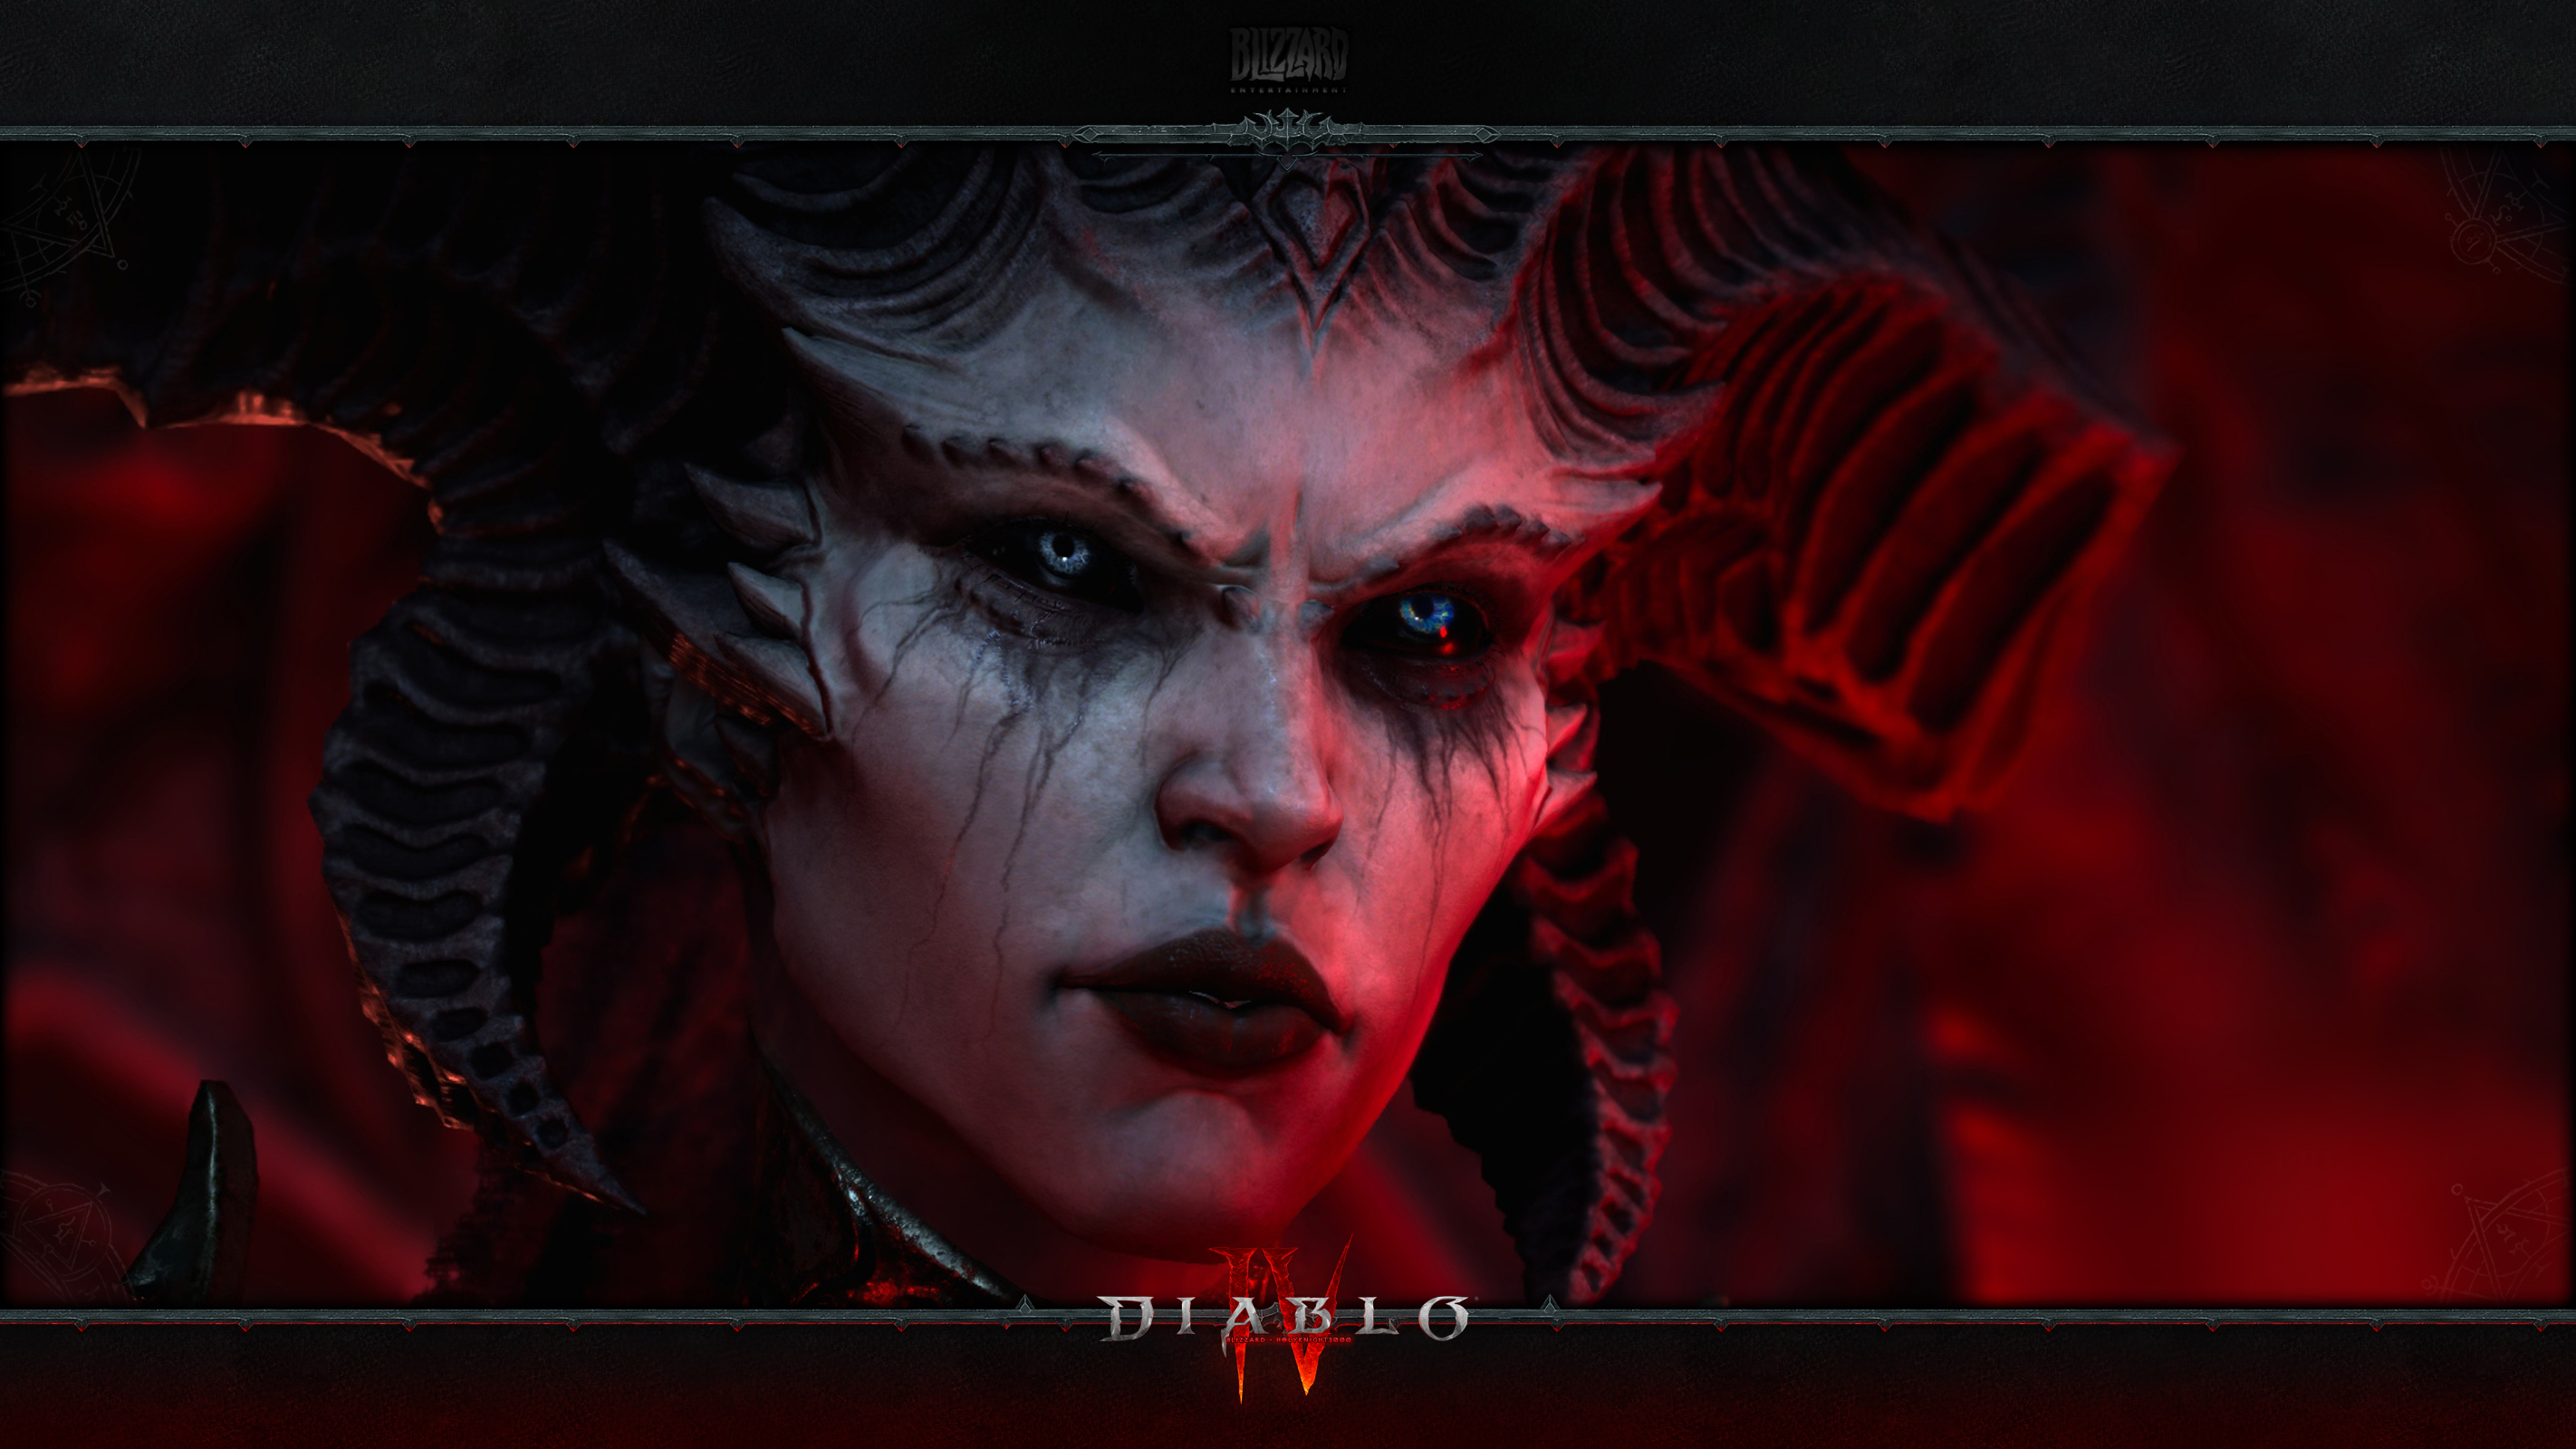 Diablo IV#13: Quarterly Update June 2021 Lilith #2